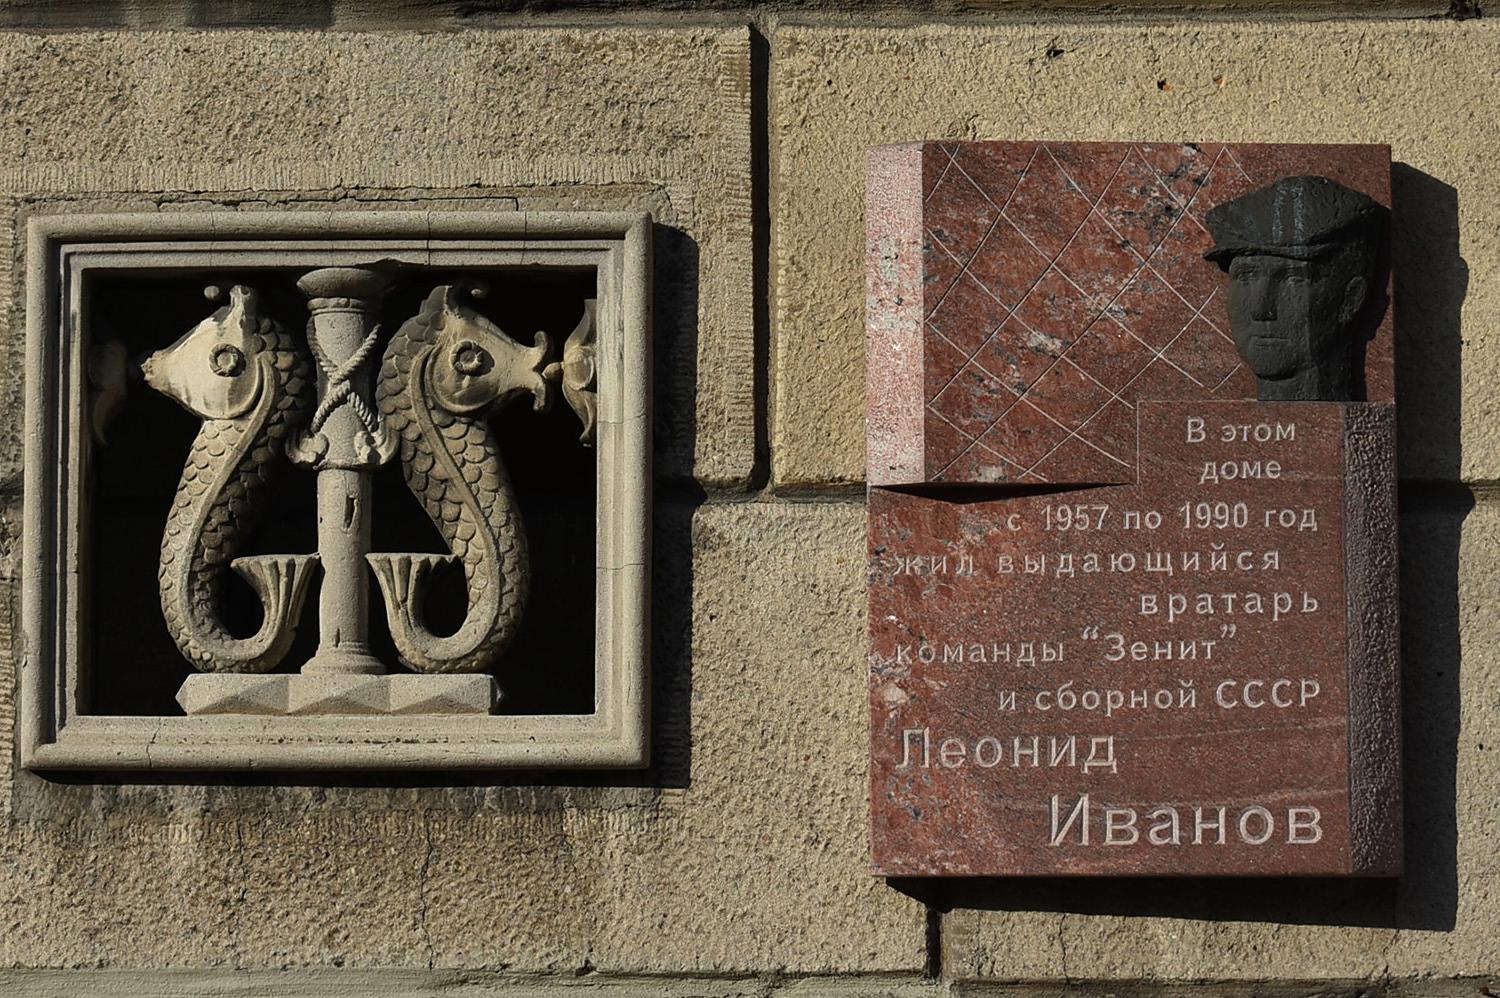 Petersburg, Кузнецовская улица, 46. Petersburg — Memorial plaques